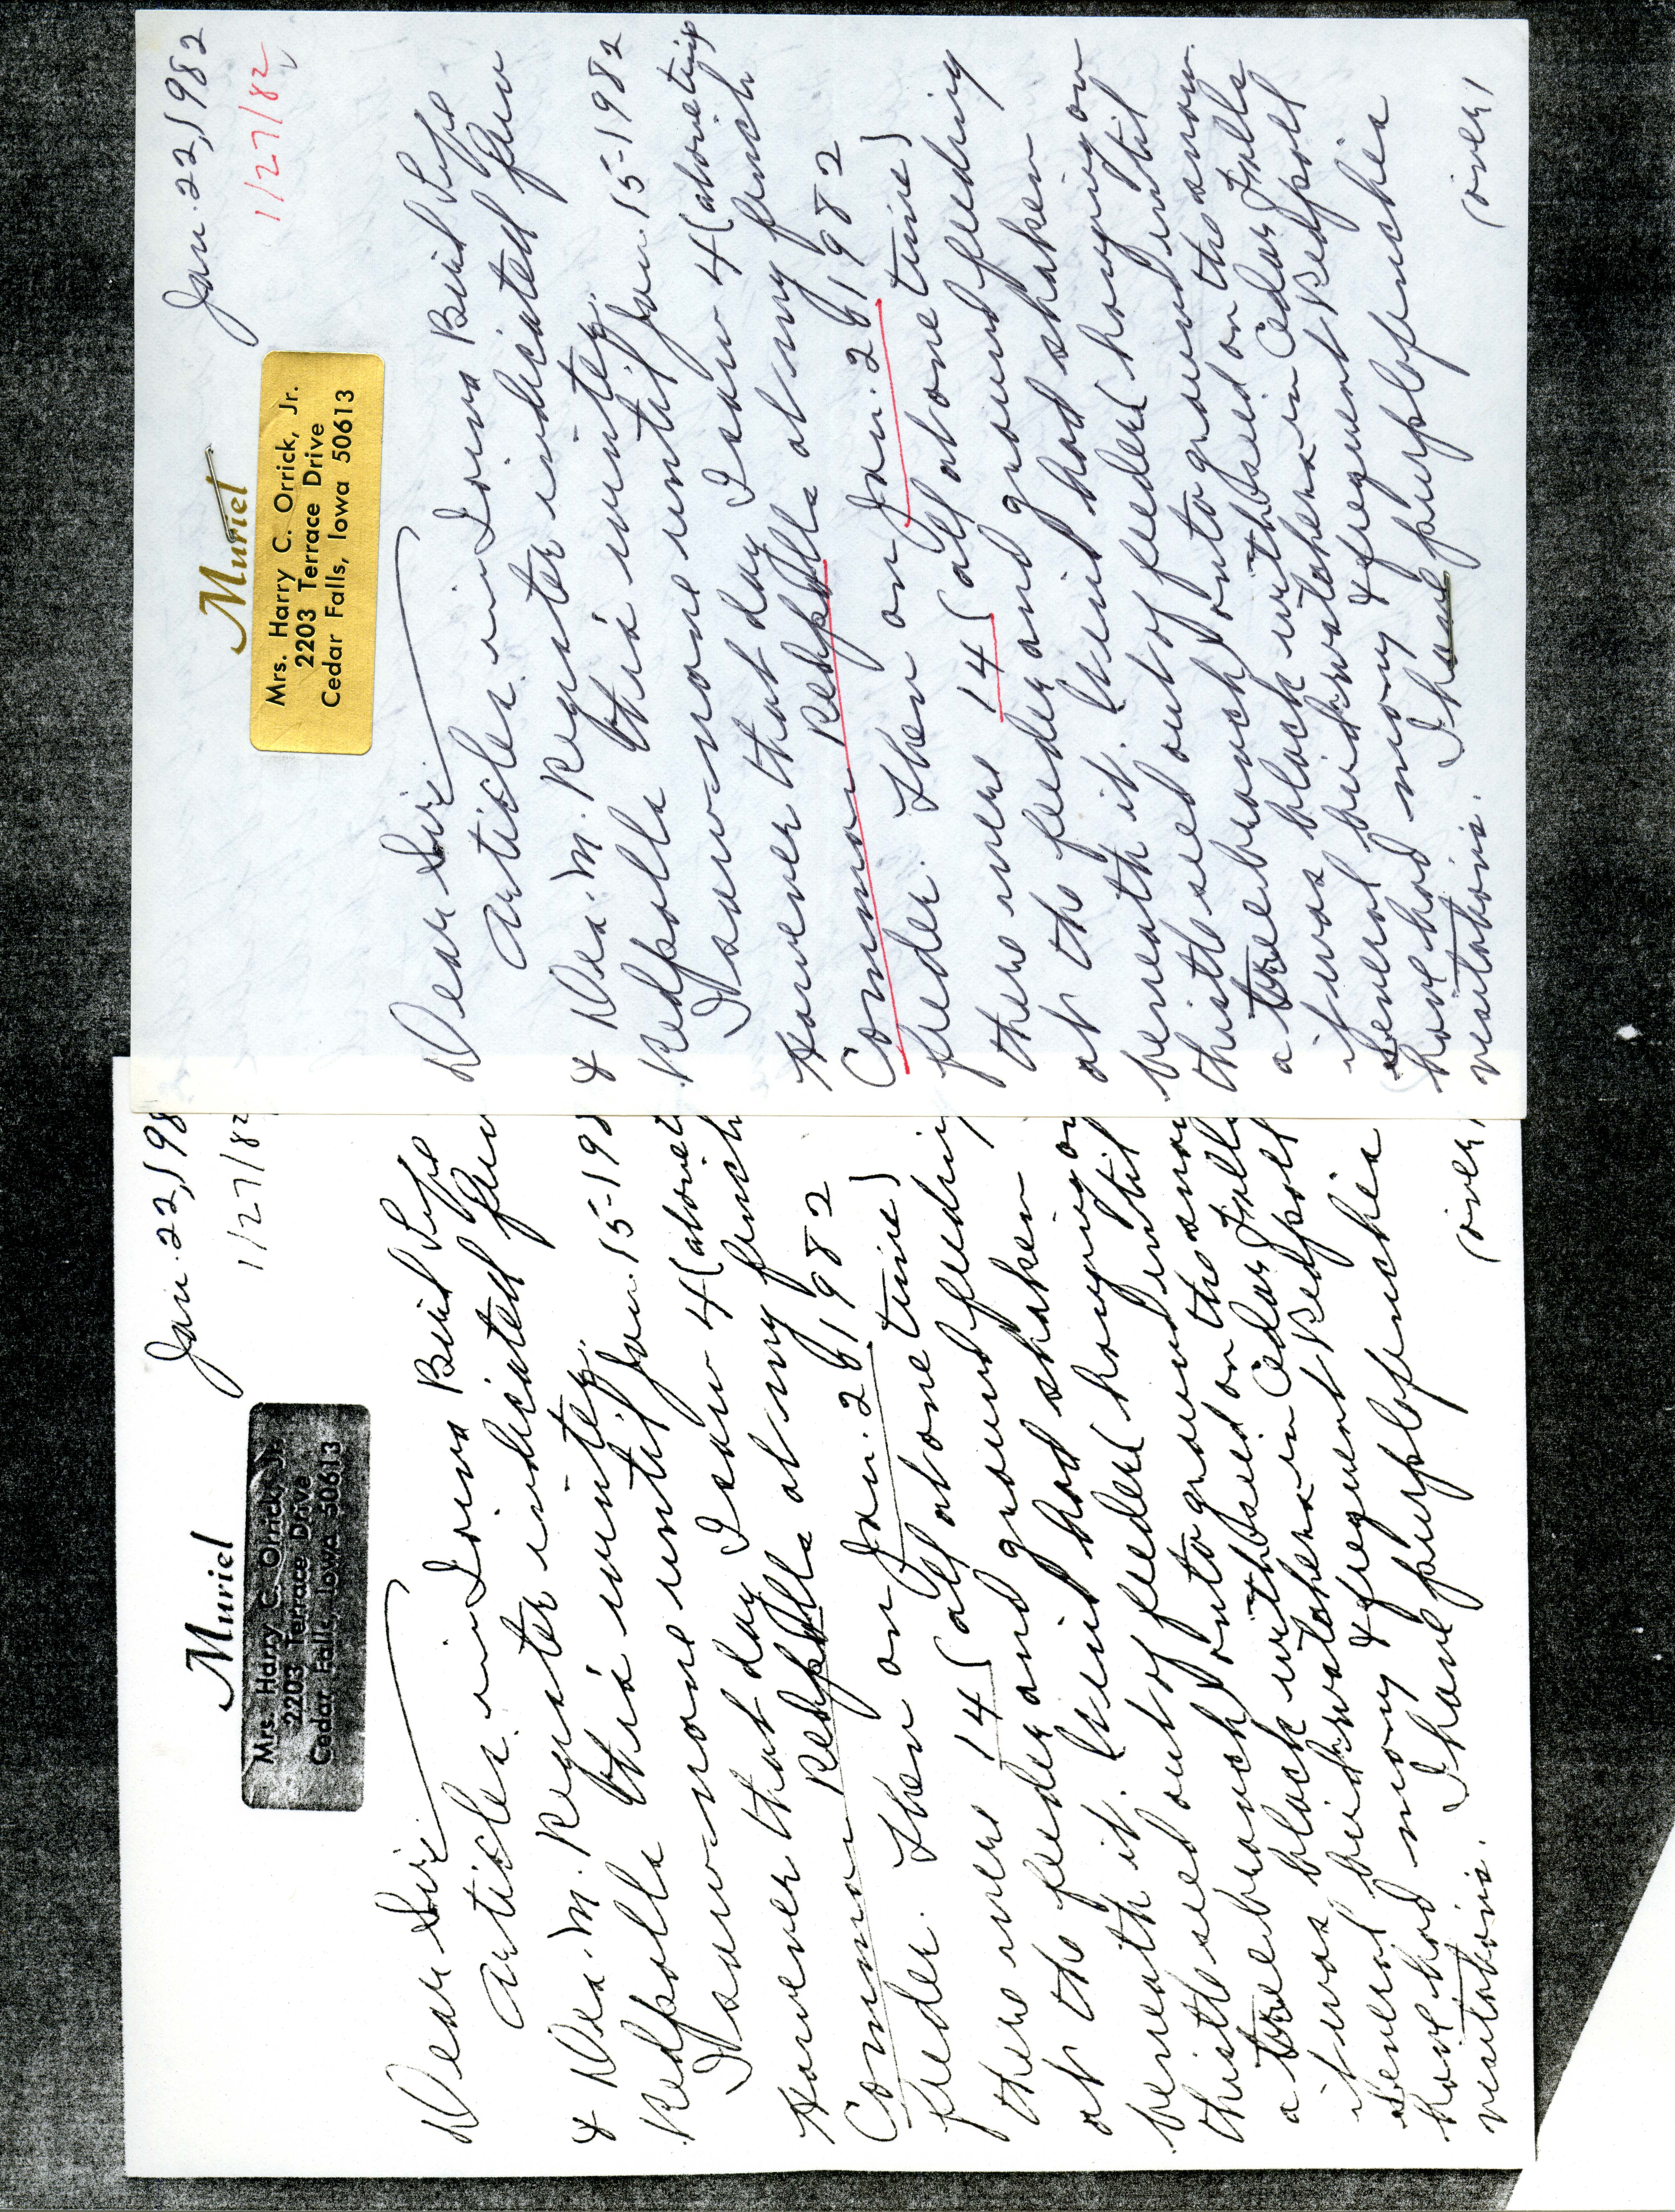 Letter from Muriel Correll Orrick regarding field notes, January 22, 1982